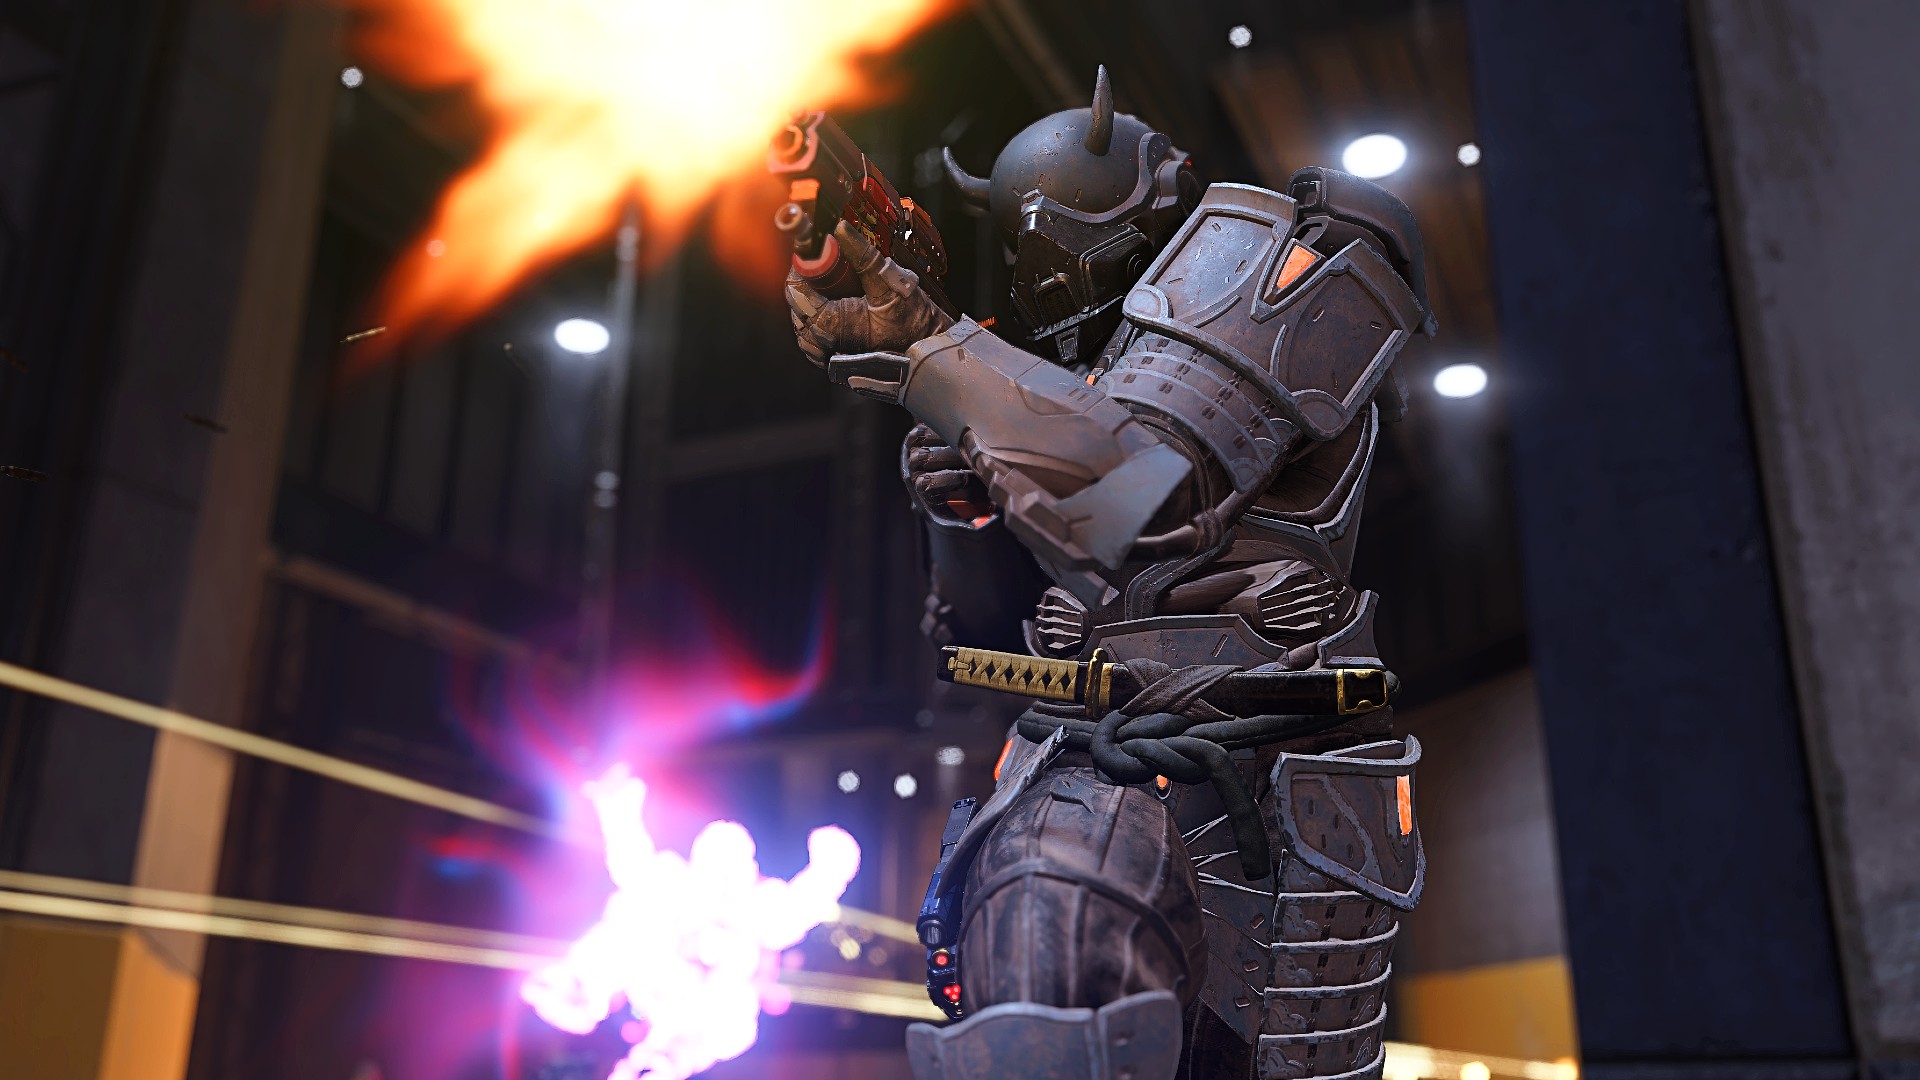 Halo Infinite update sa campaign co-op, Forge bahagyang naantala